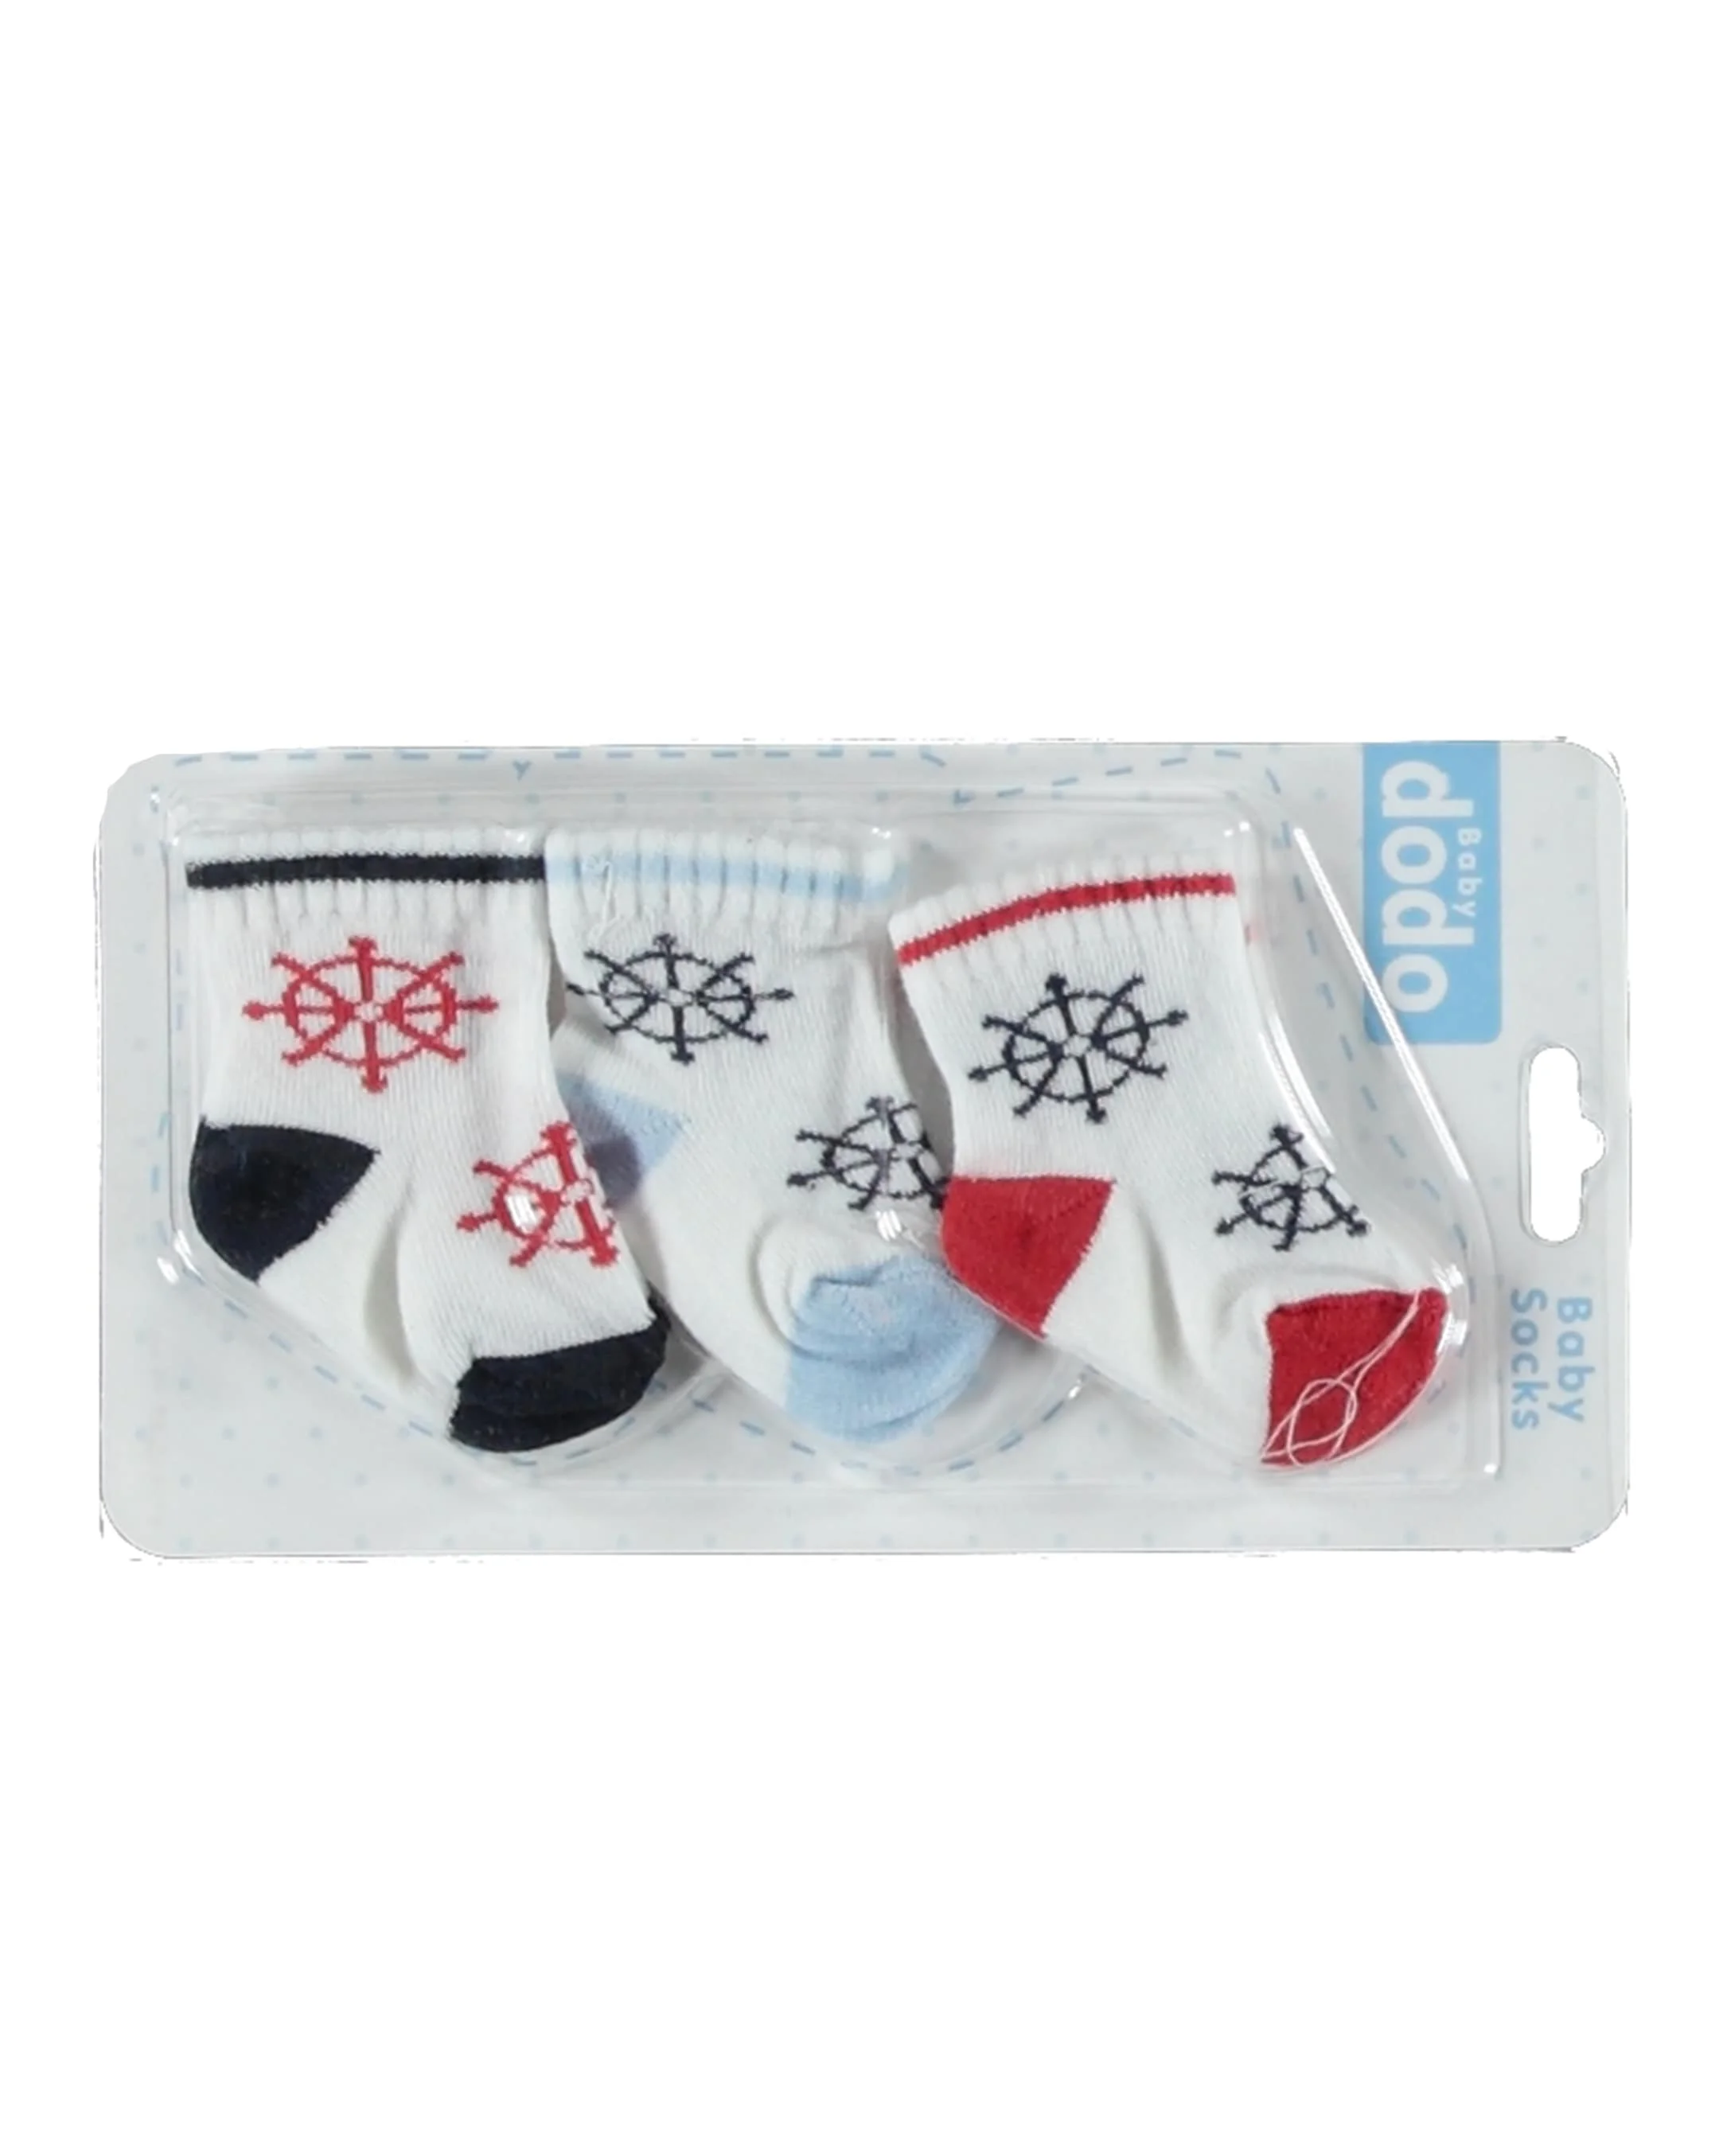 StyleTurk, Baby Dodo Socks Set Newborn Baby Socks, Turkish Cotton Socks,  Set of 3 Patterned Socks